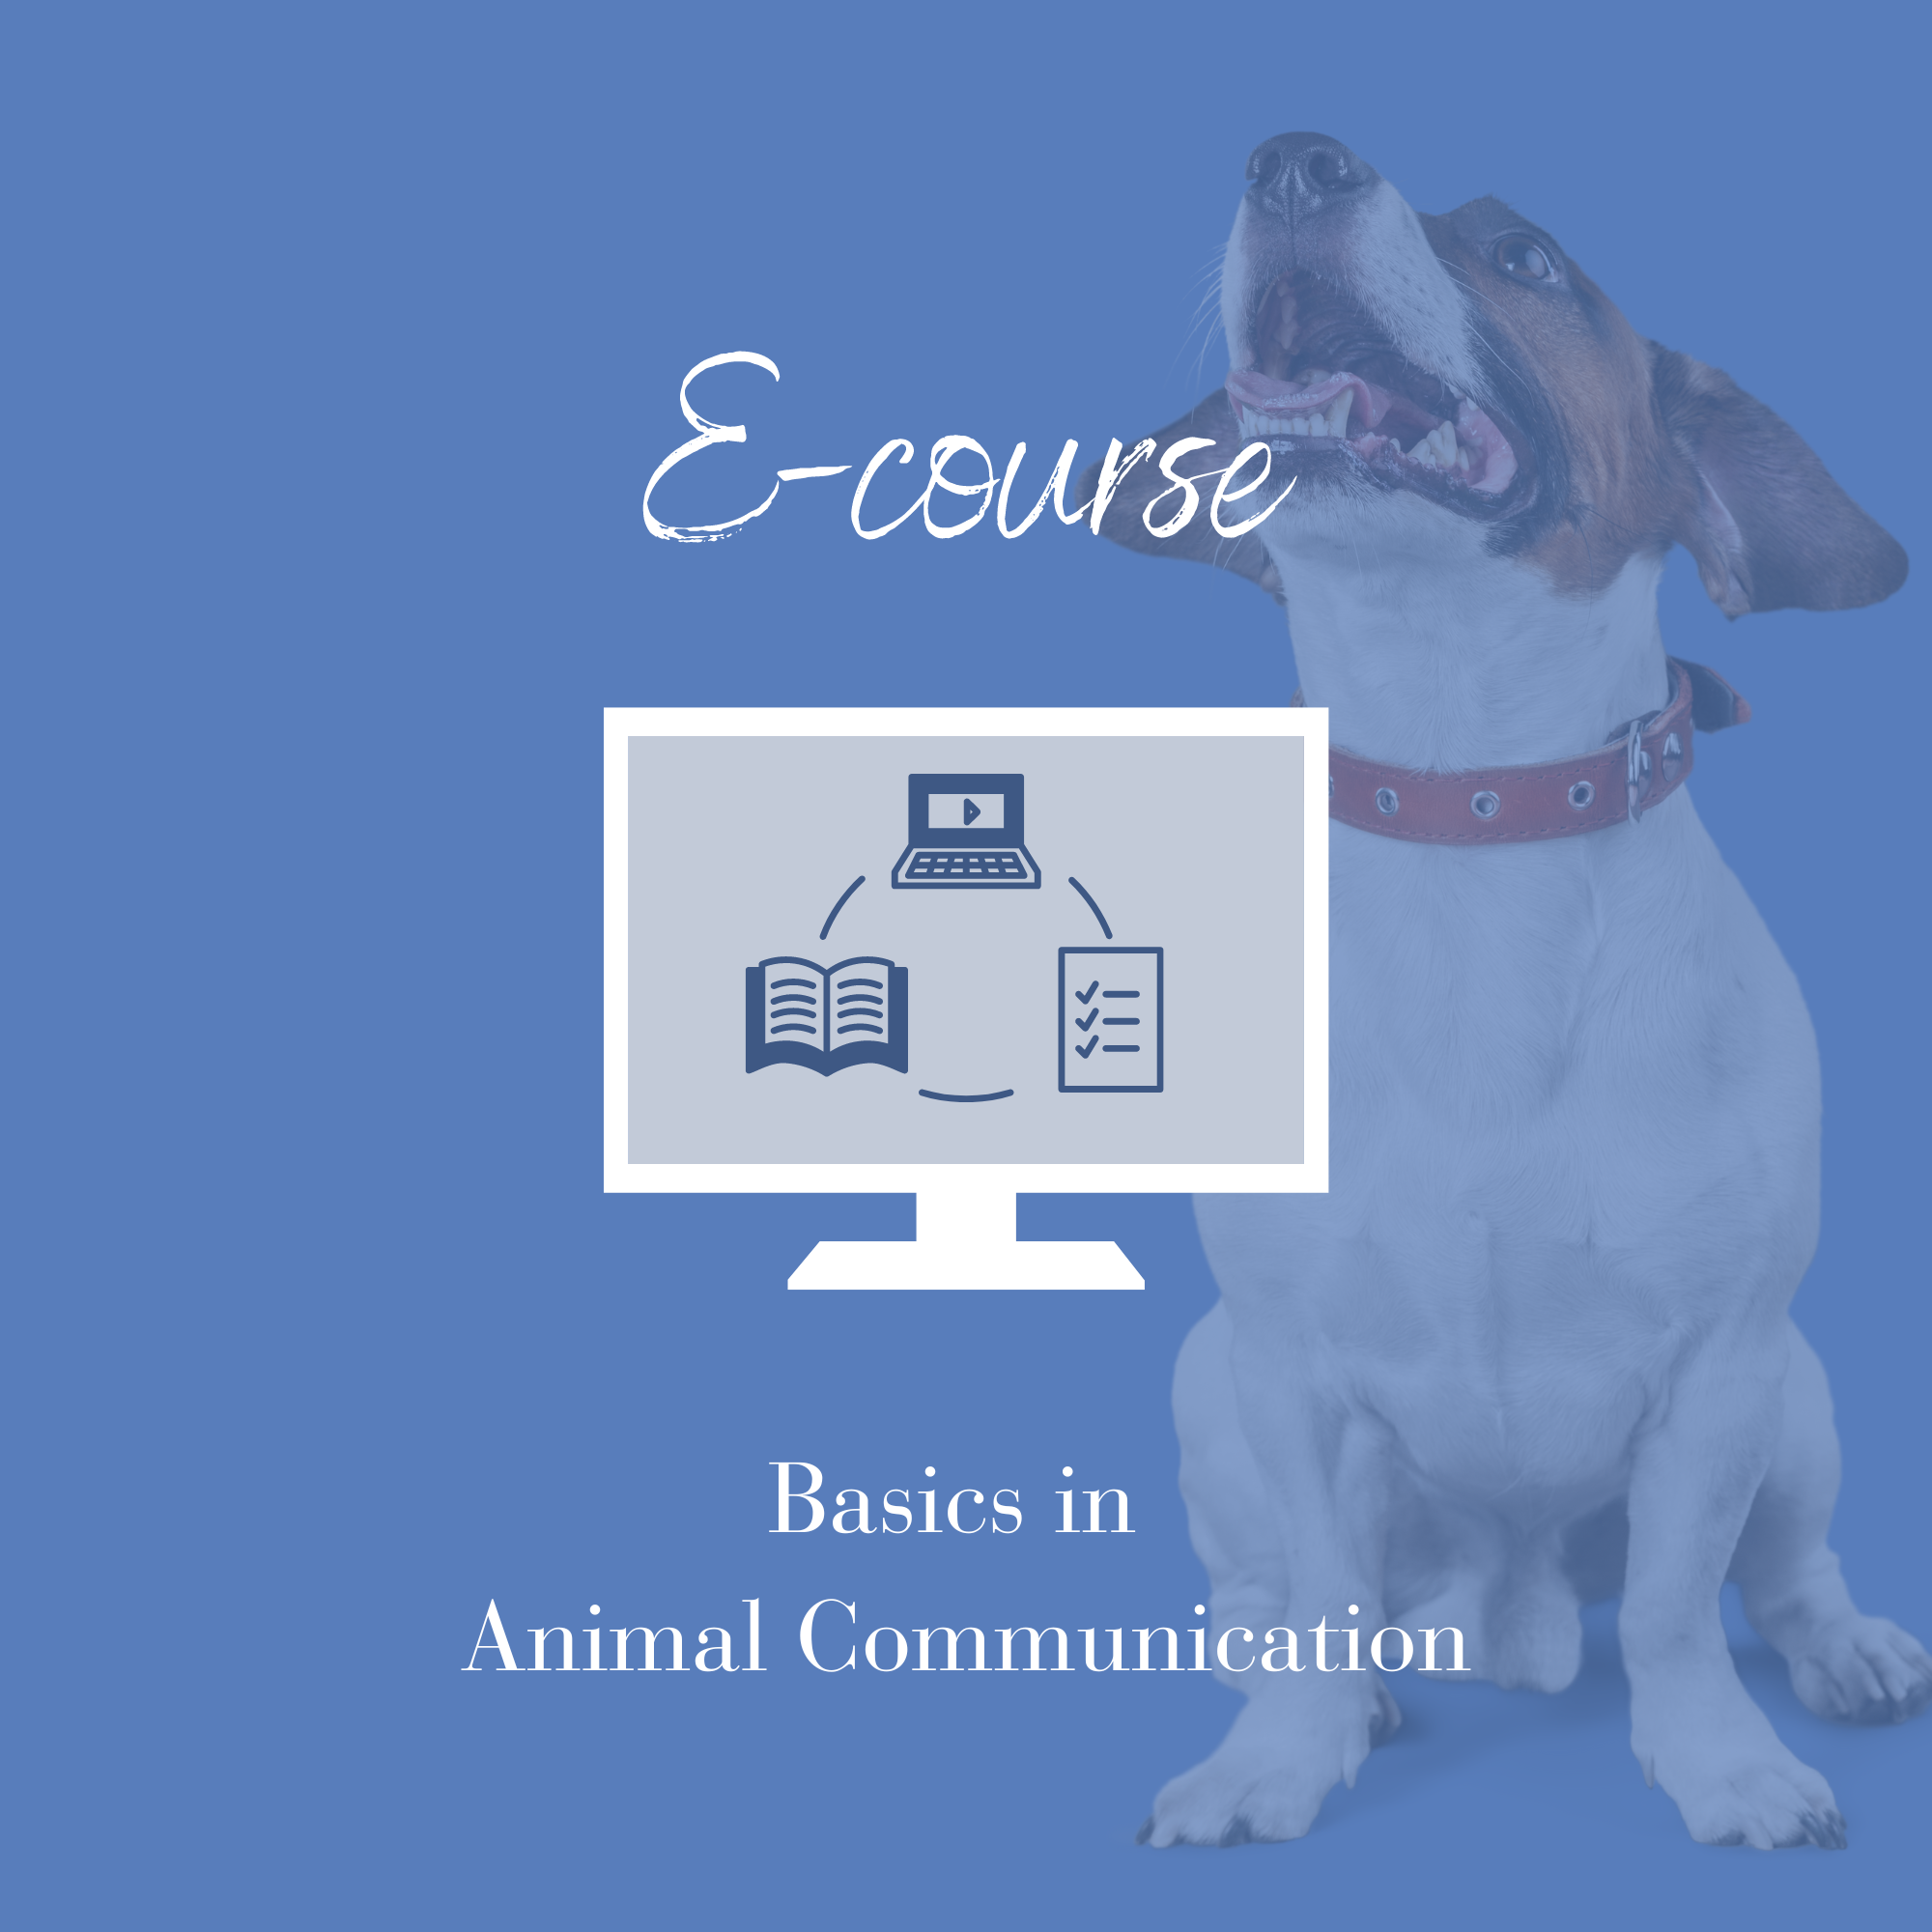 E-course Animal Communication